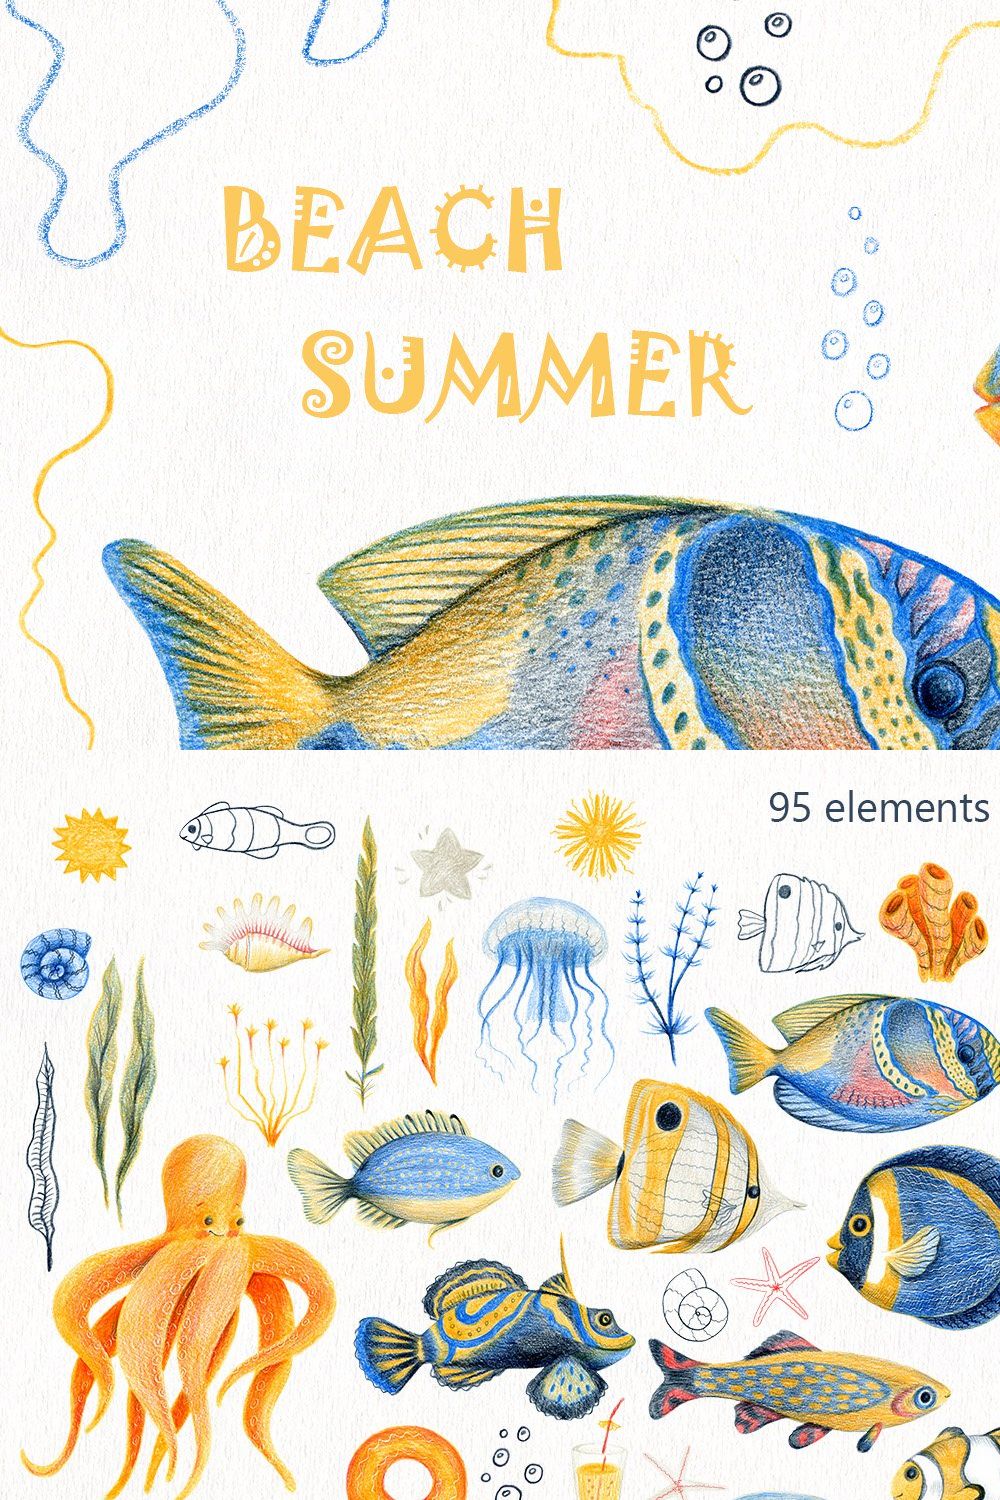 Beach Summer - color pencil clipart pinterest preview image.